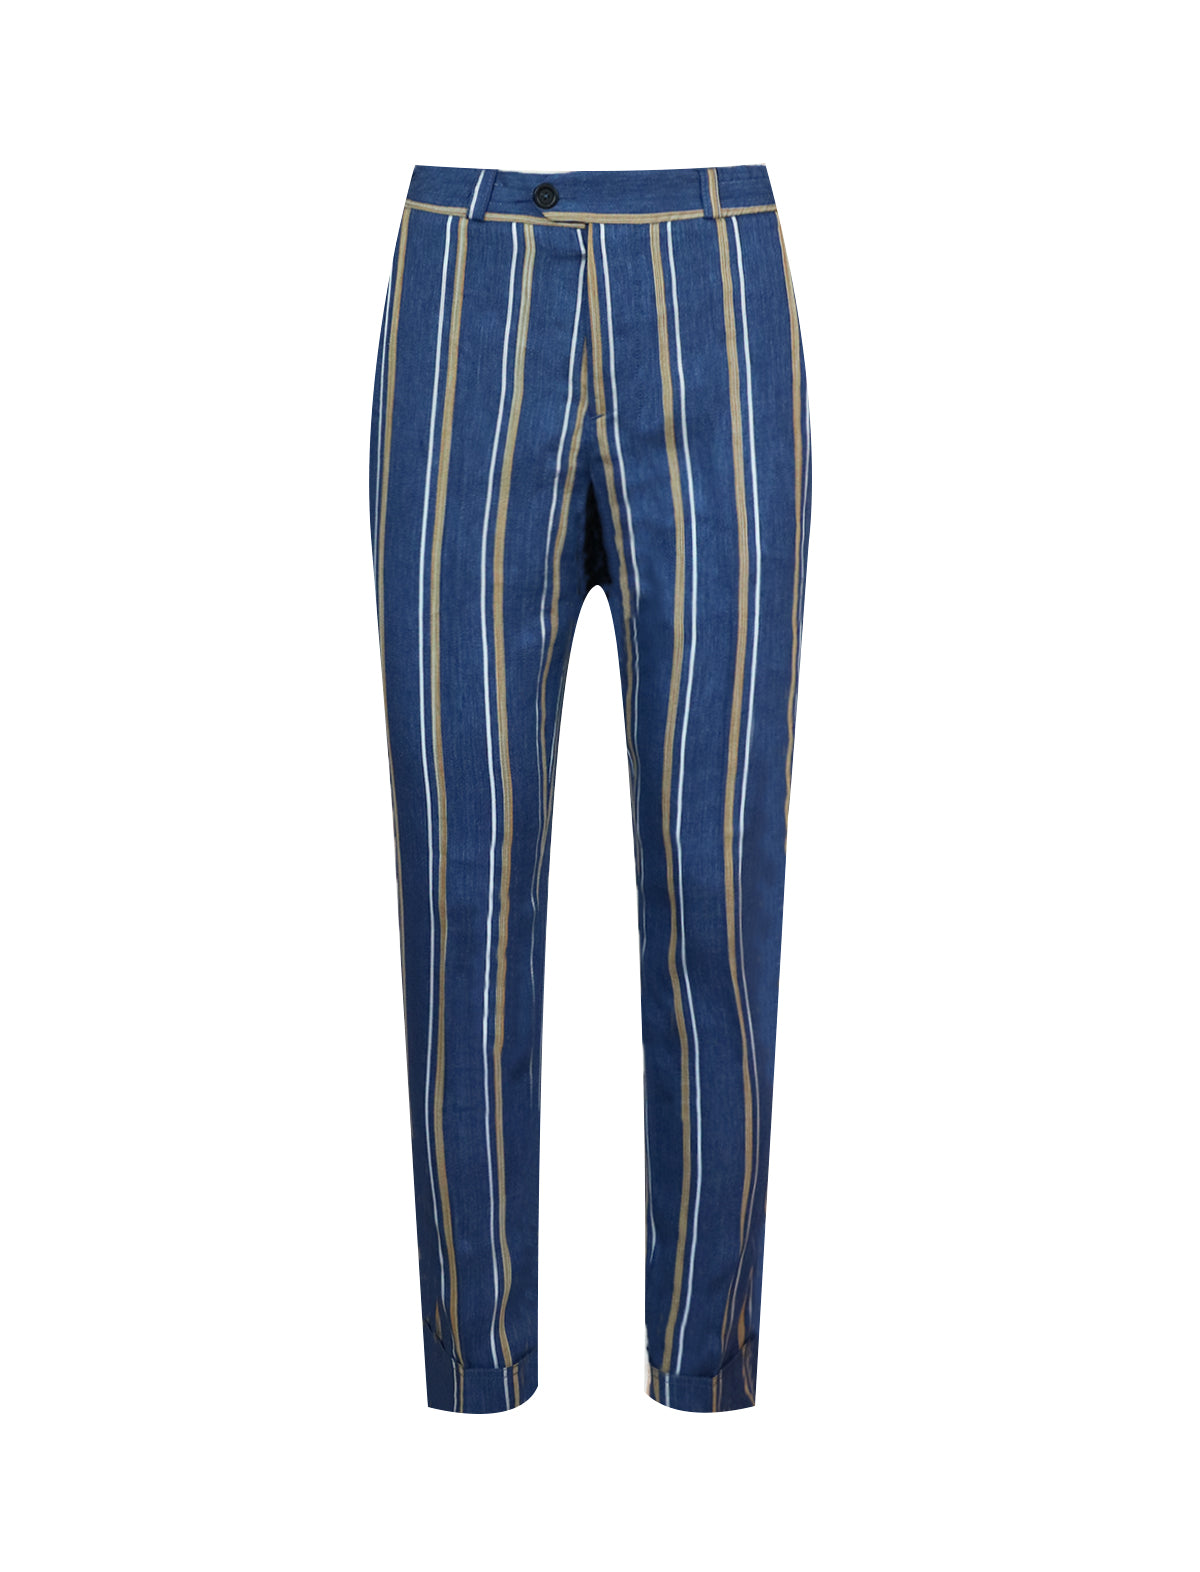 PT Torino Trouser in Blue/Beige Stripes